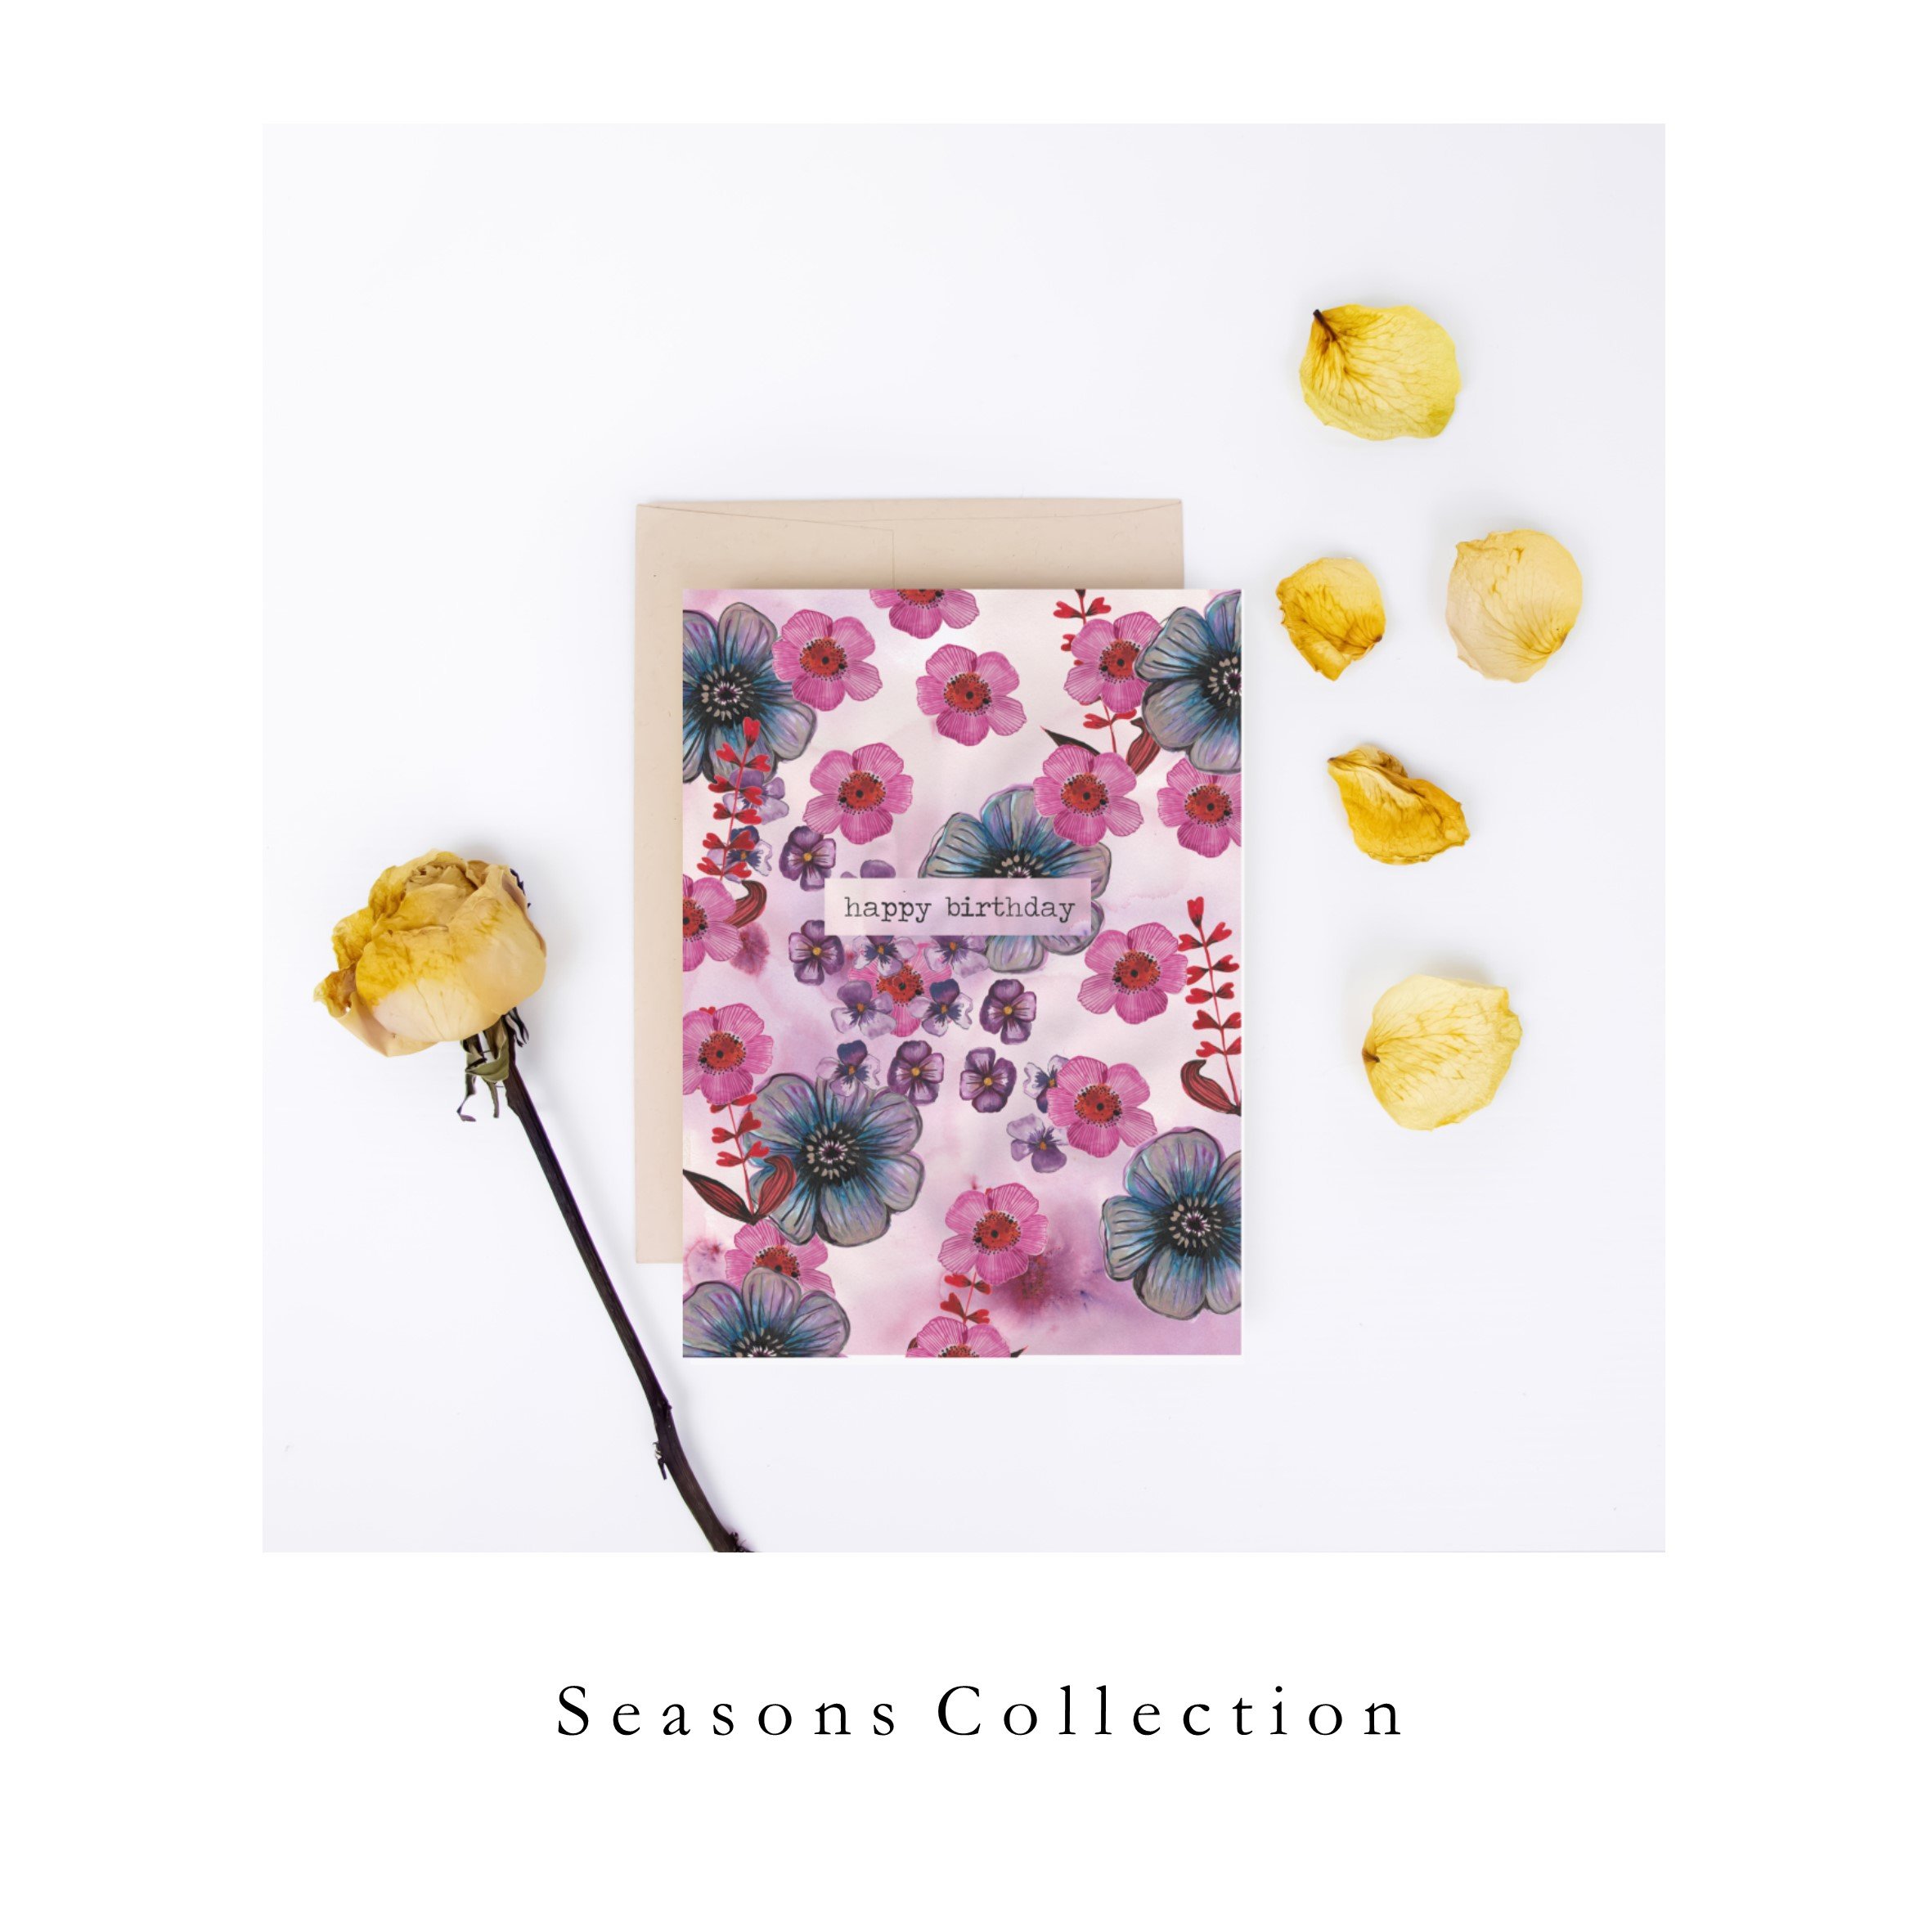 Seasons collection 2.jpg